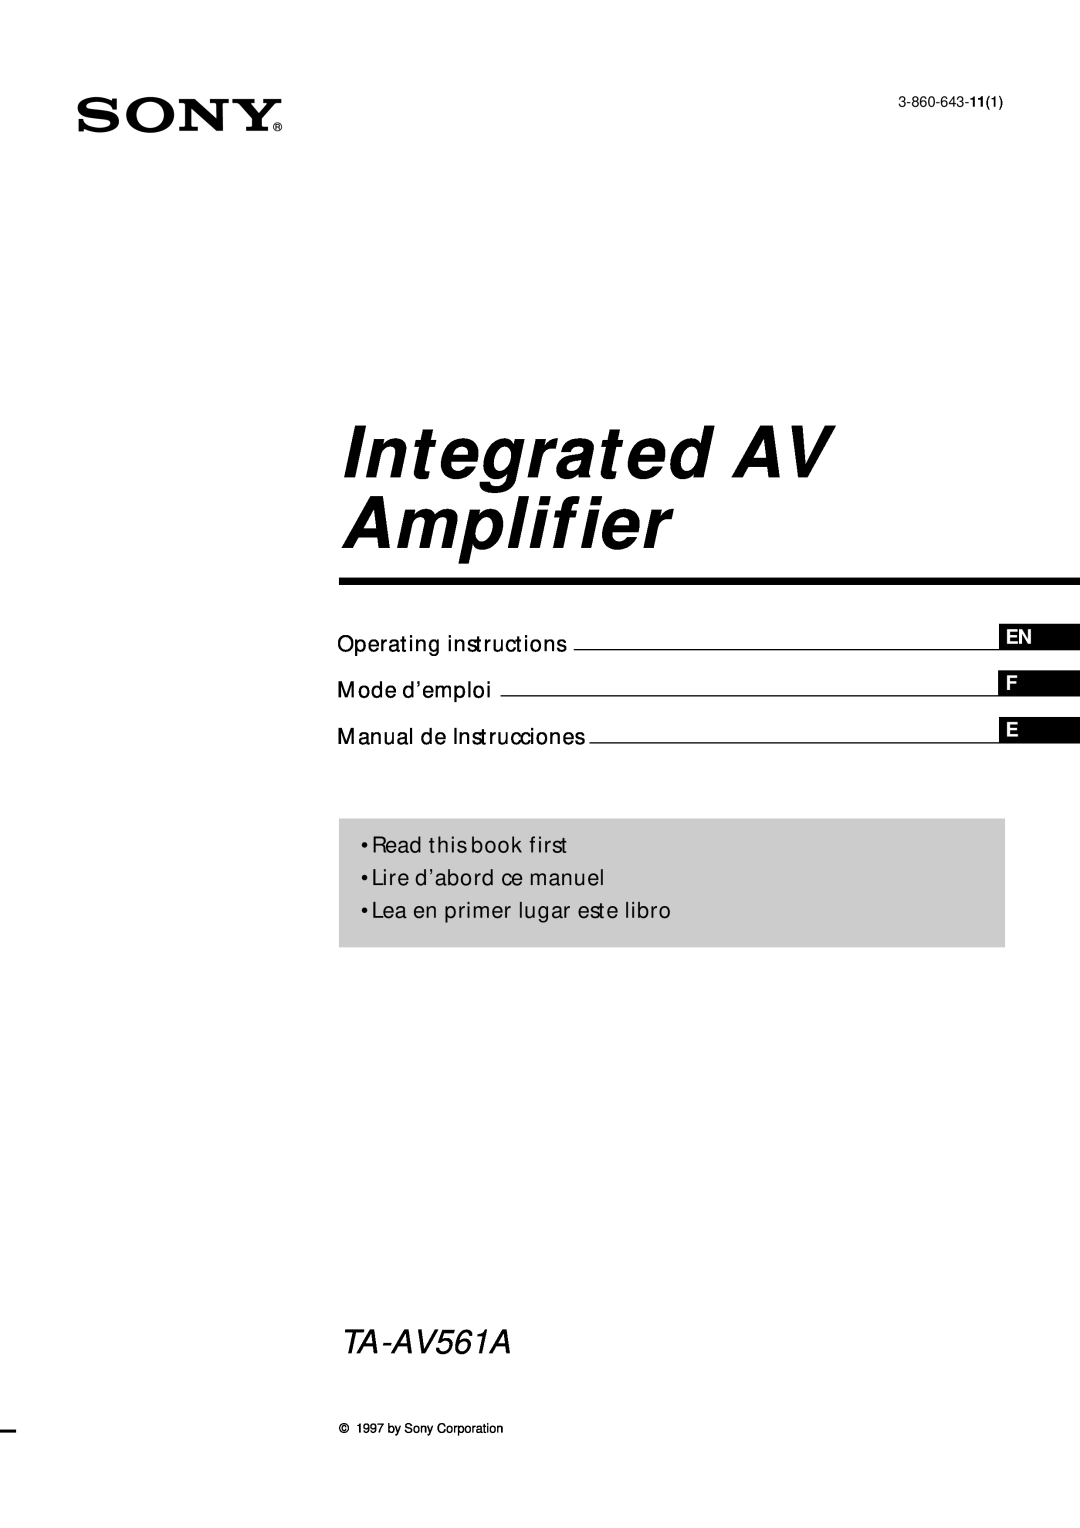 Sony TA-AV561A manual Getting Started, En F E, Integrated AV Amplifier, Operating instructions Mode d’emploi 